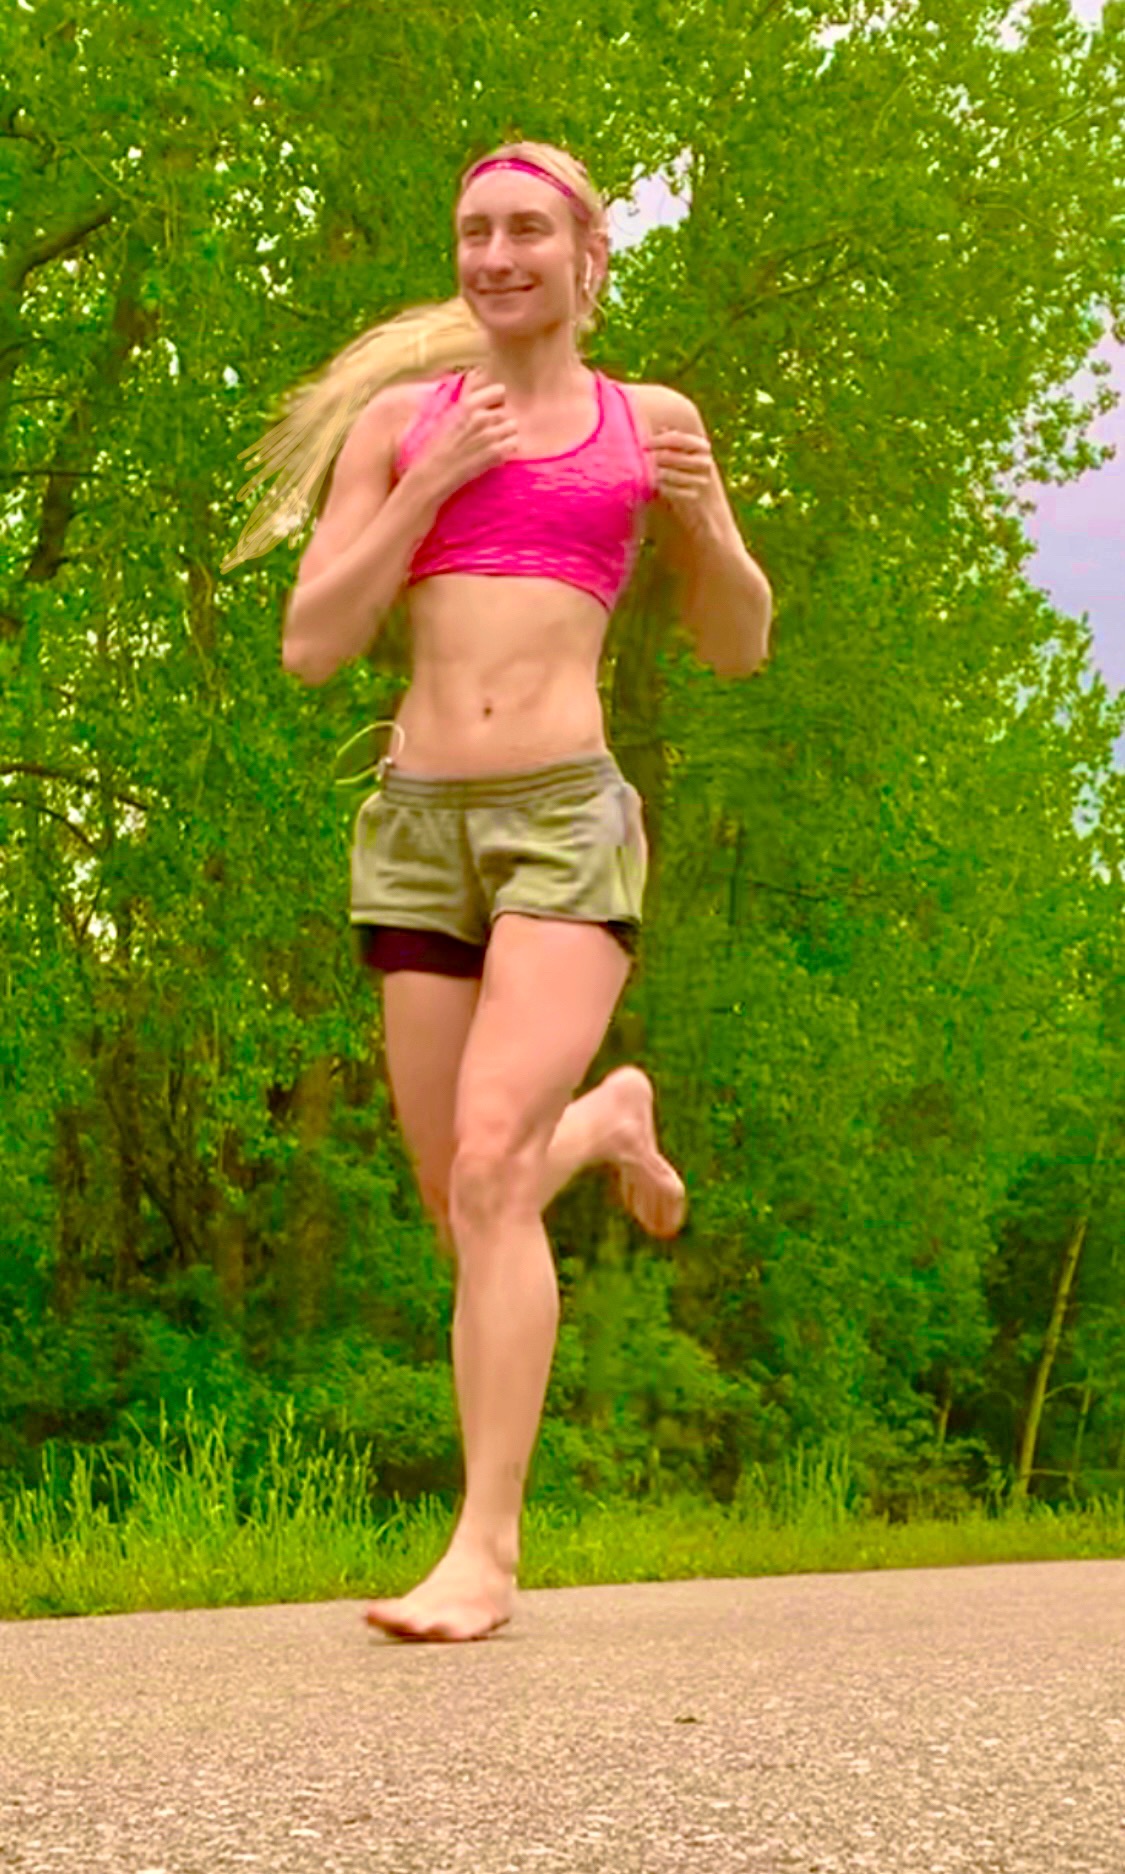 Does Barefoot Running Help Prevent Heel Striking?